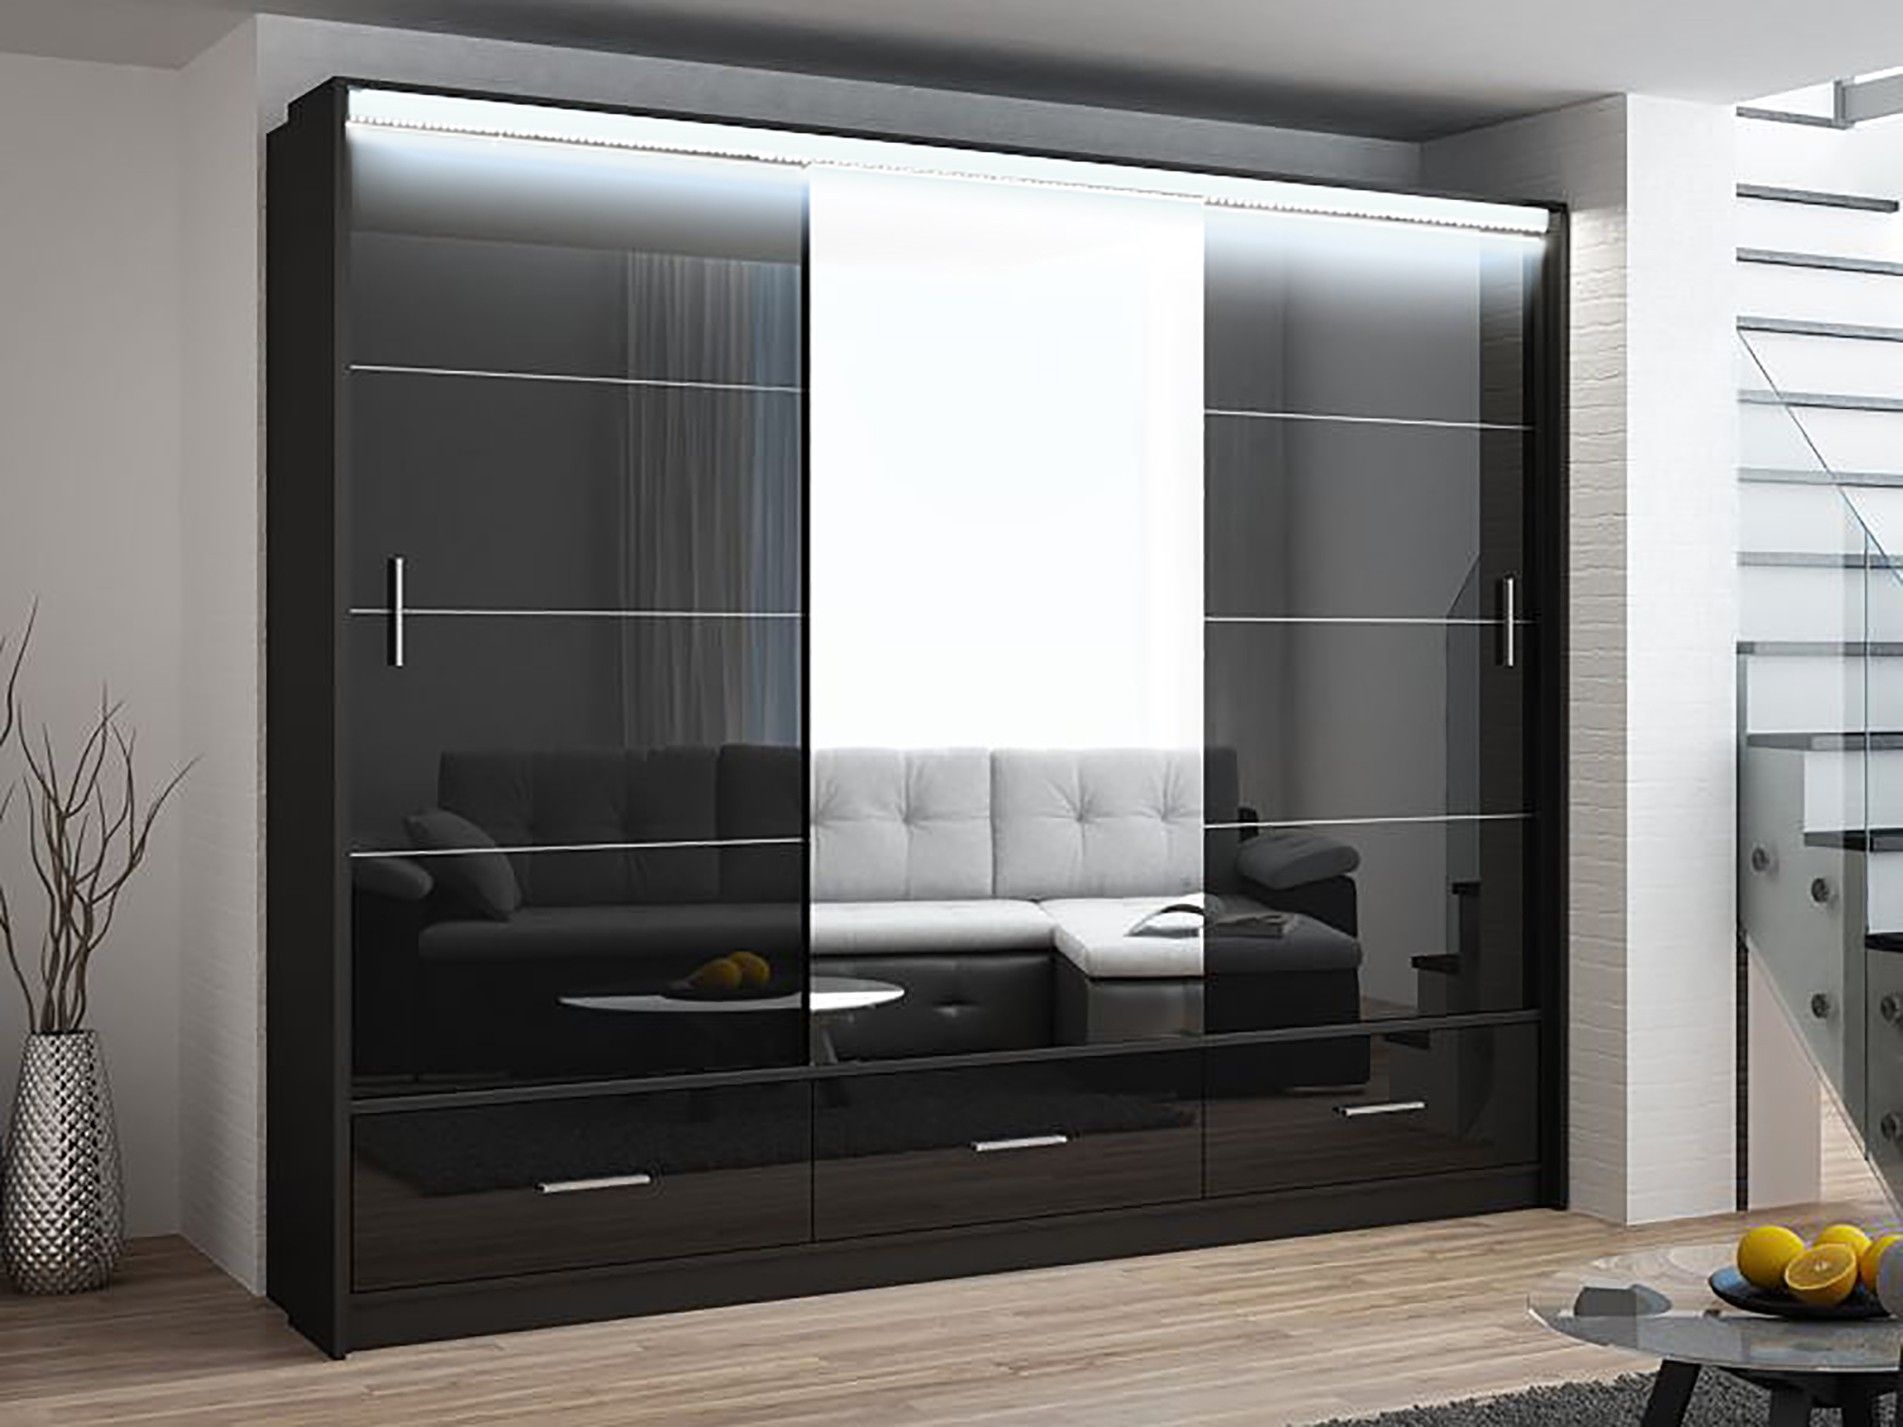 Marsylia Wardrobe, Black Gloss + Mirror 255cm ,hull Furniture With Regard To Black Shiny Wardrobes (View 5 of 15)